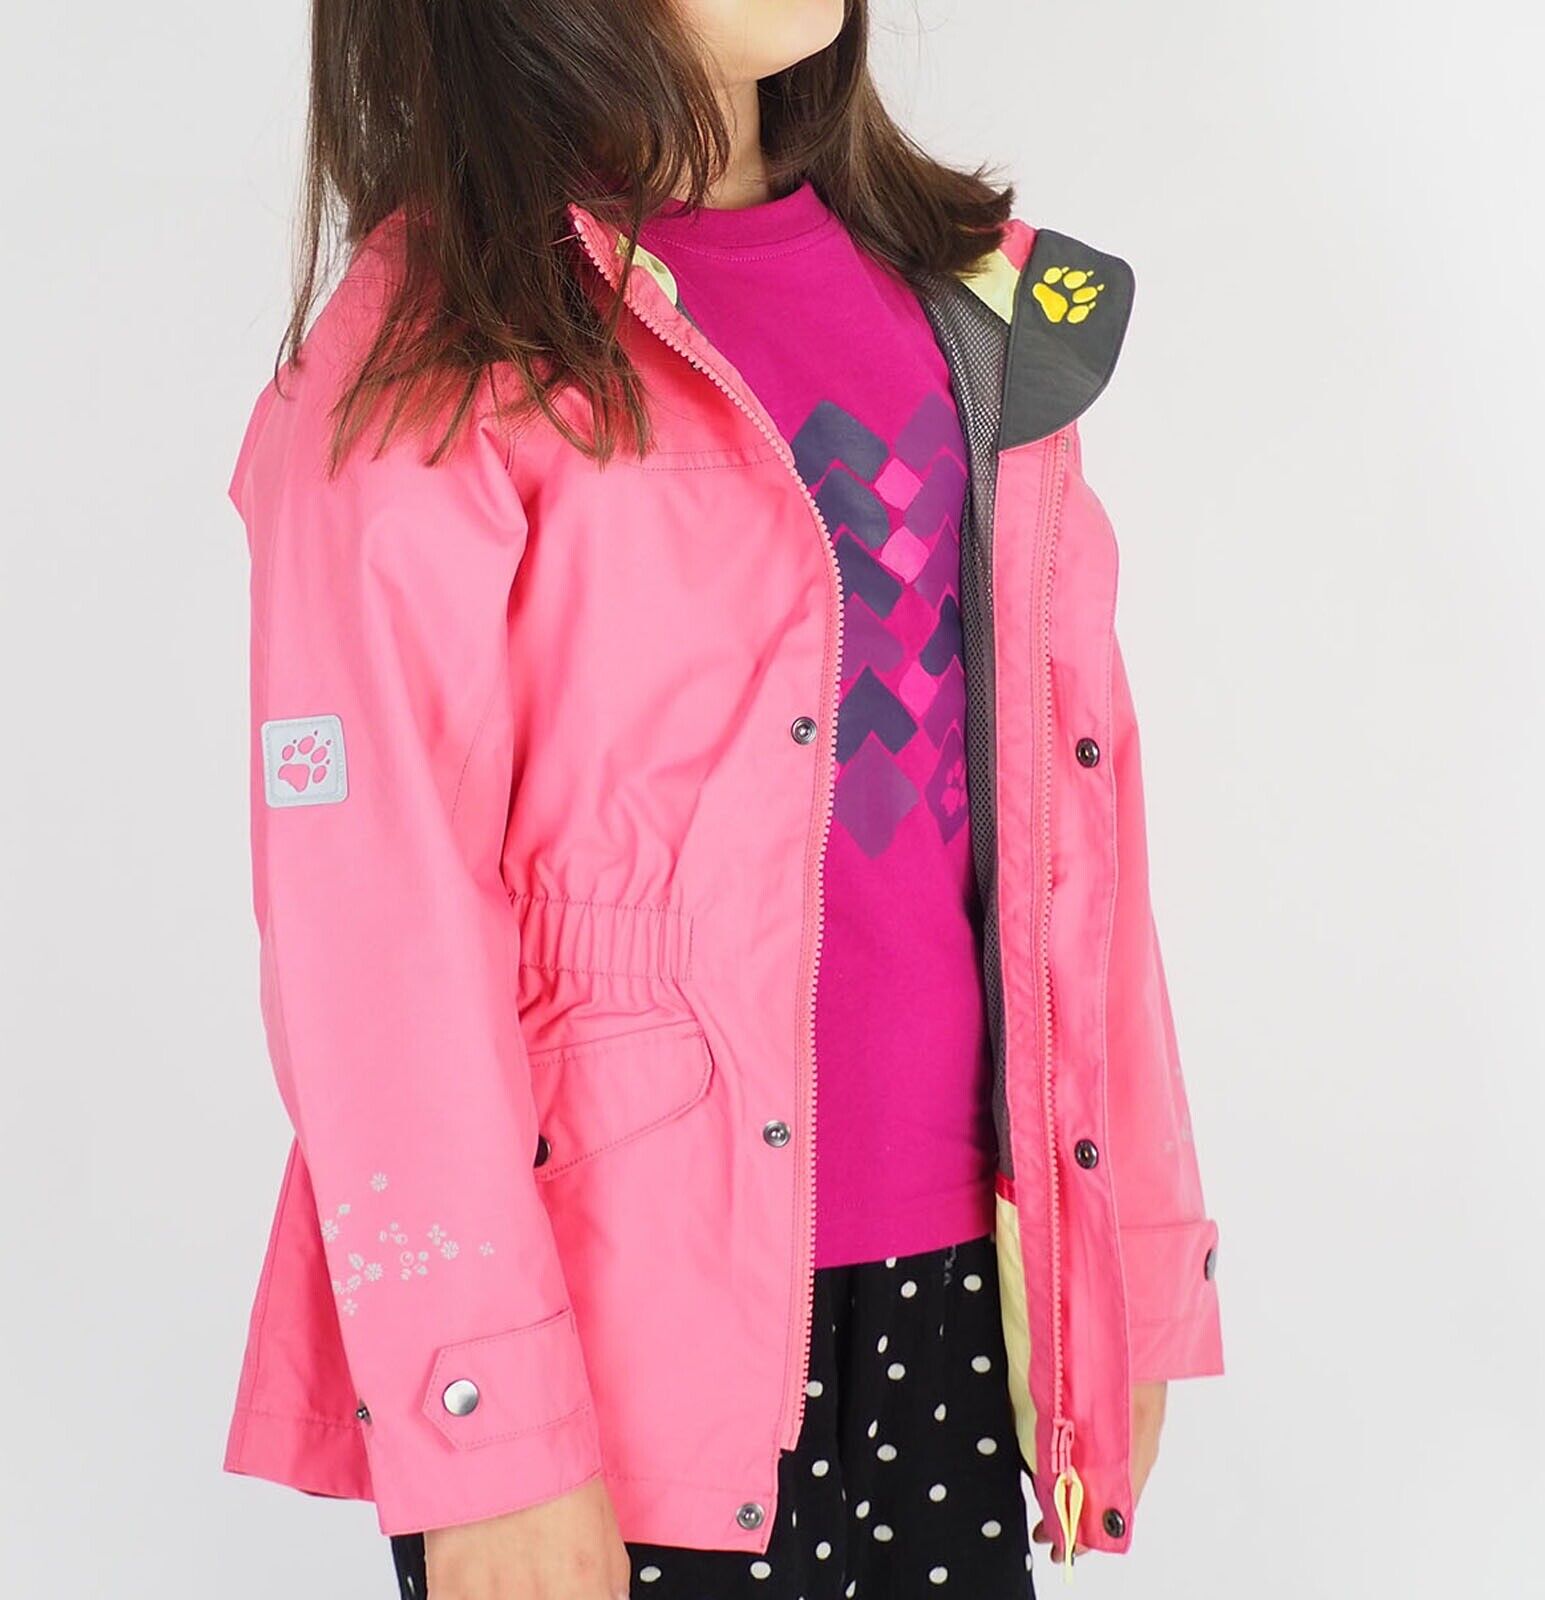 Girls Jack Wolfskin Virginia 1603571 Rosebud Waterproof Parka Jacket - London Top Style